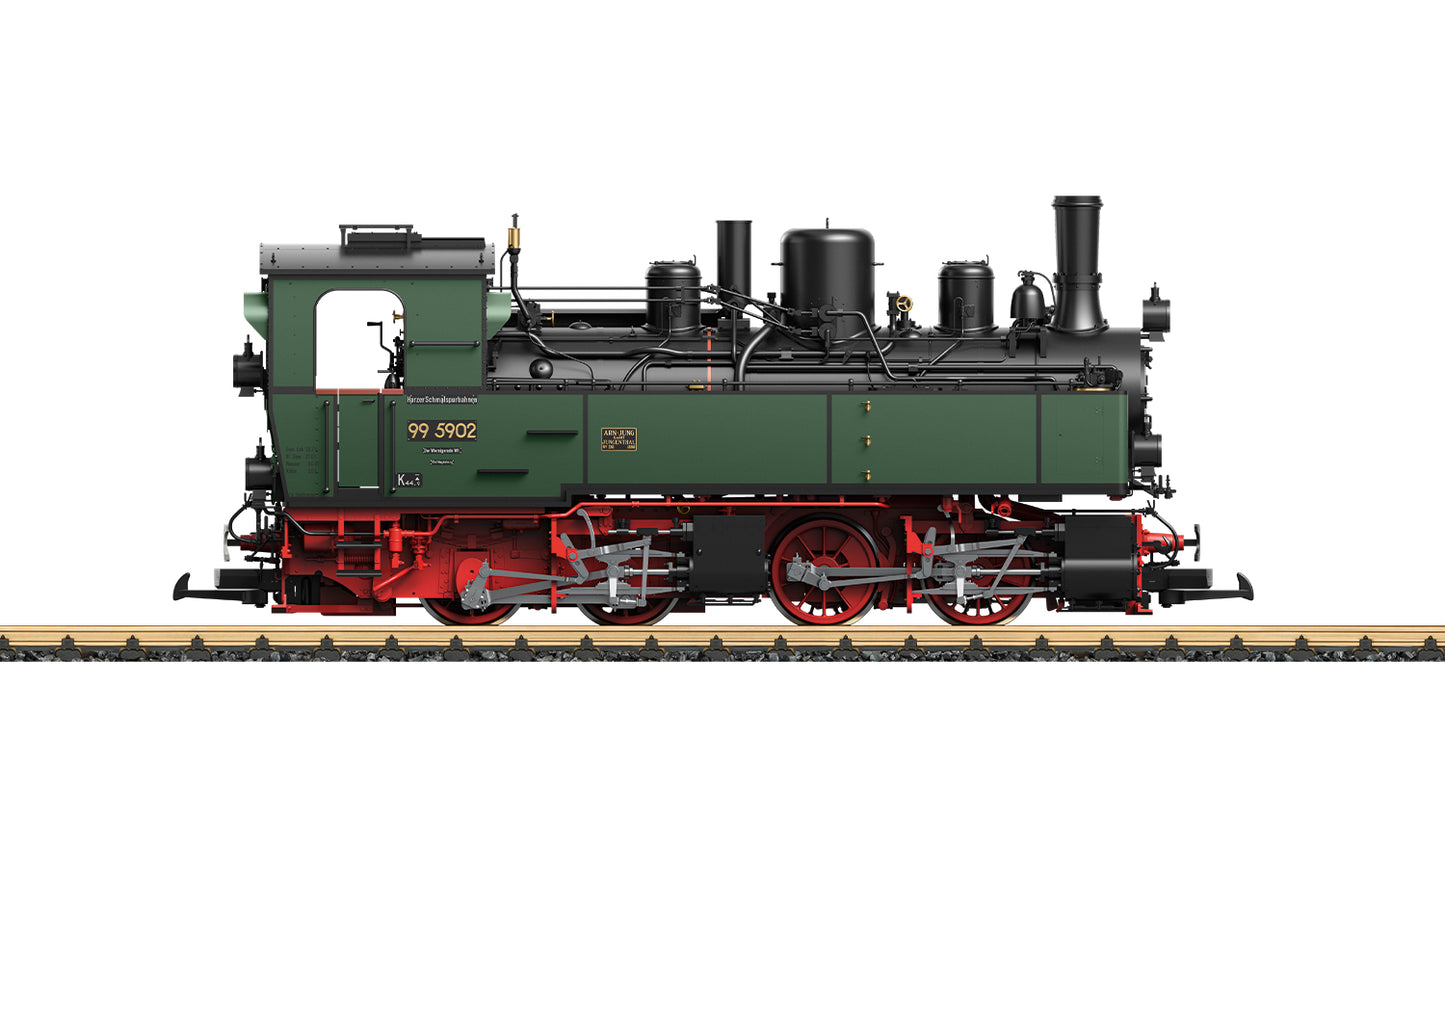 LGB 26592: HSB Steam Locomotive, Road Number 99 5902